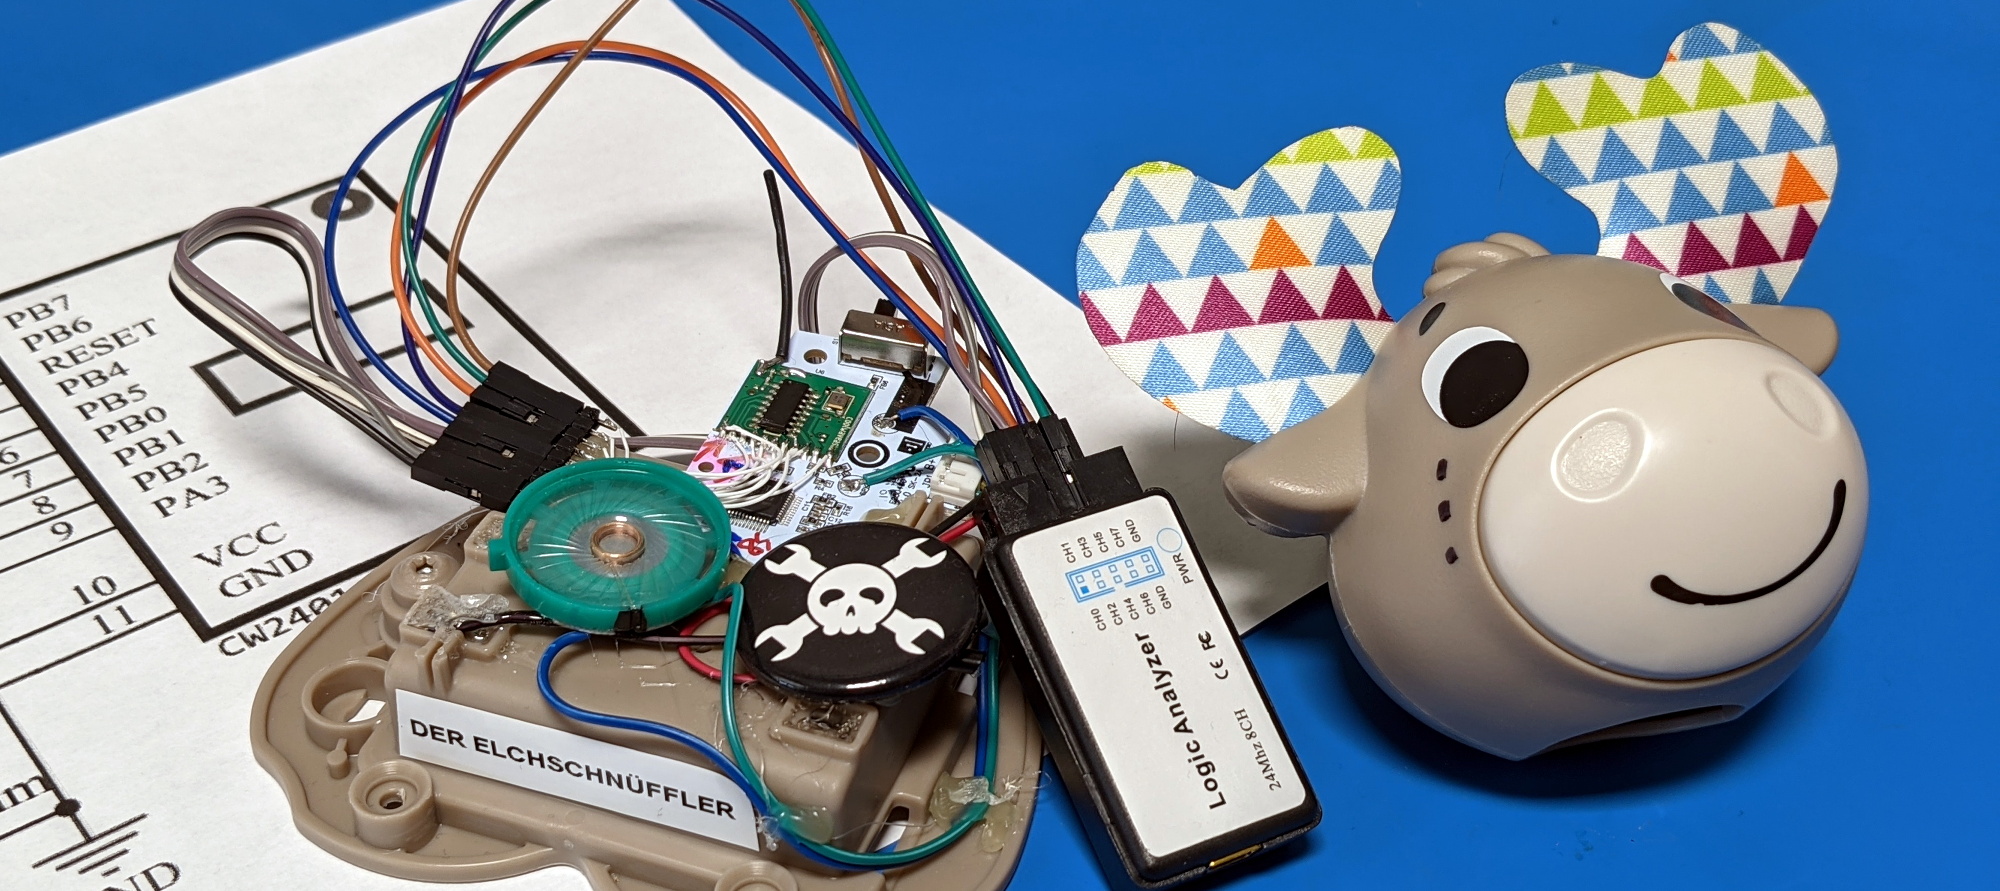 Linkimals, Toys That Make Noise Wiki